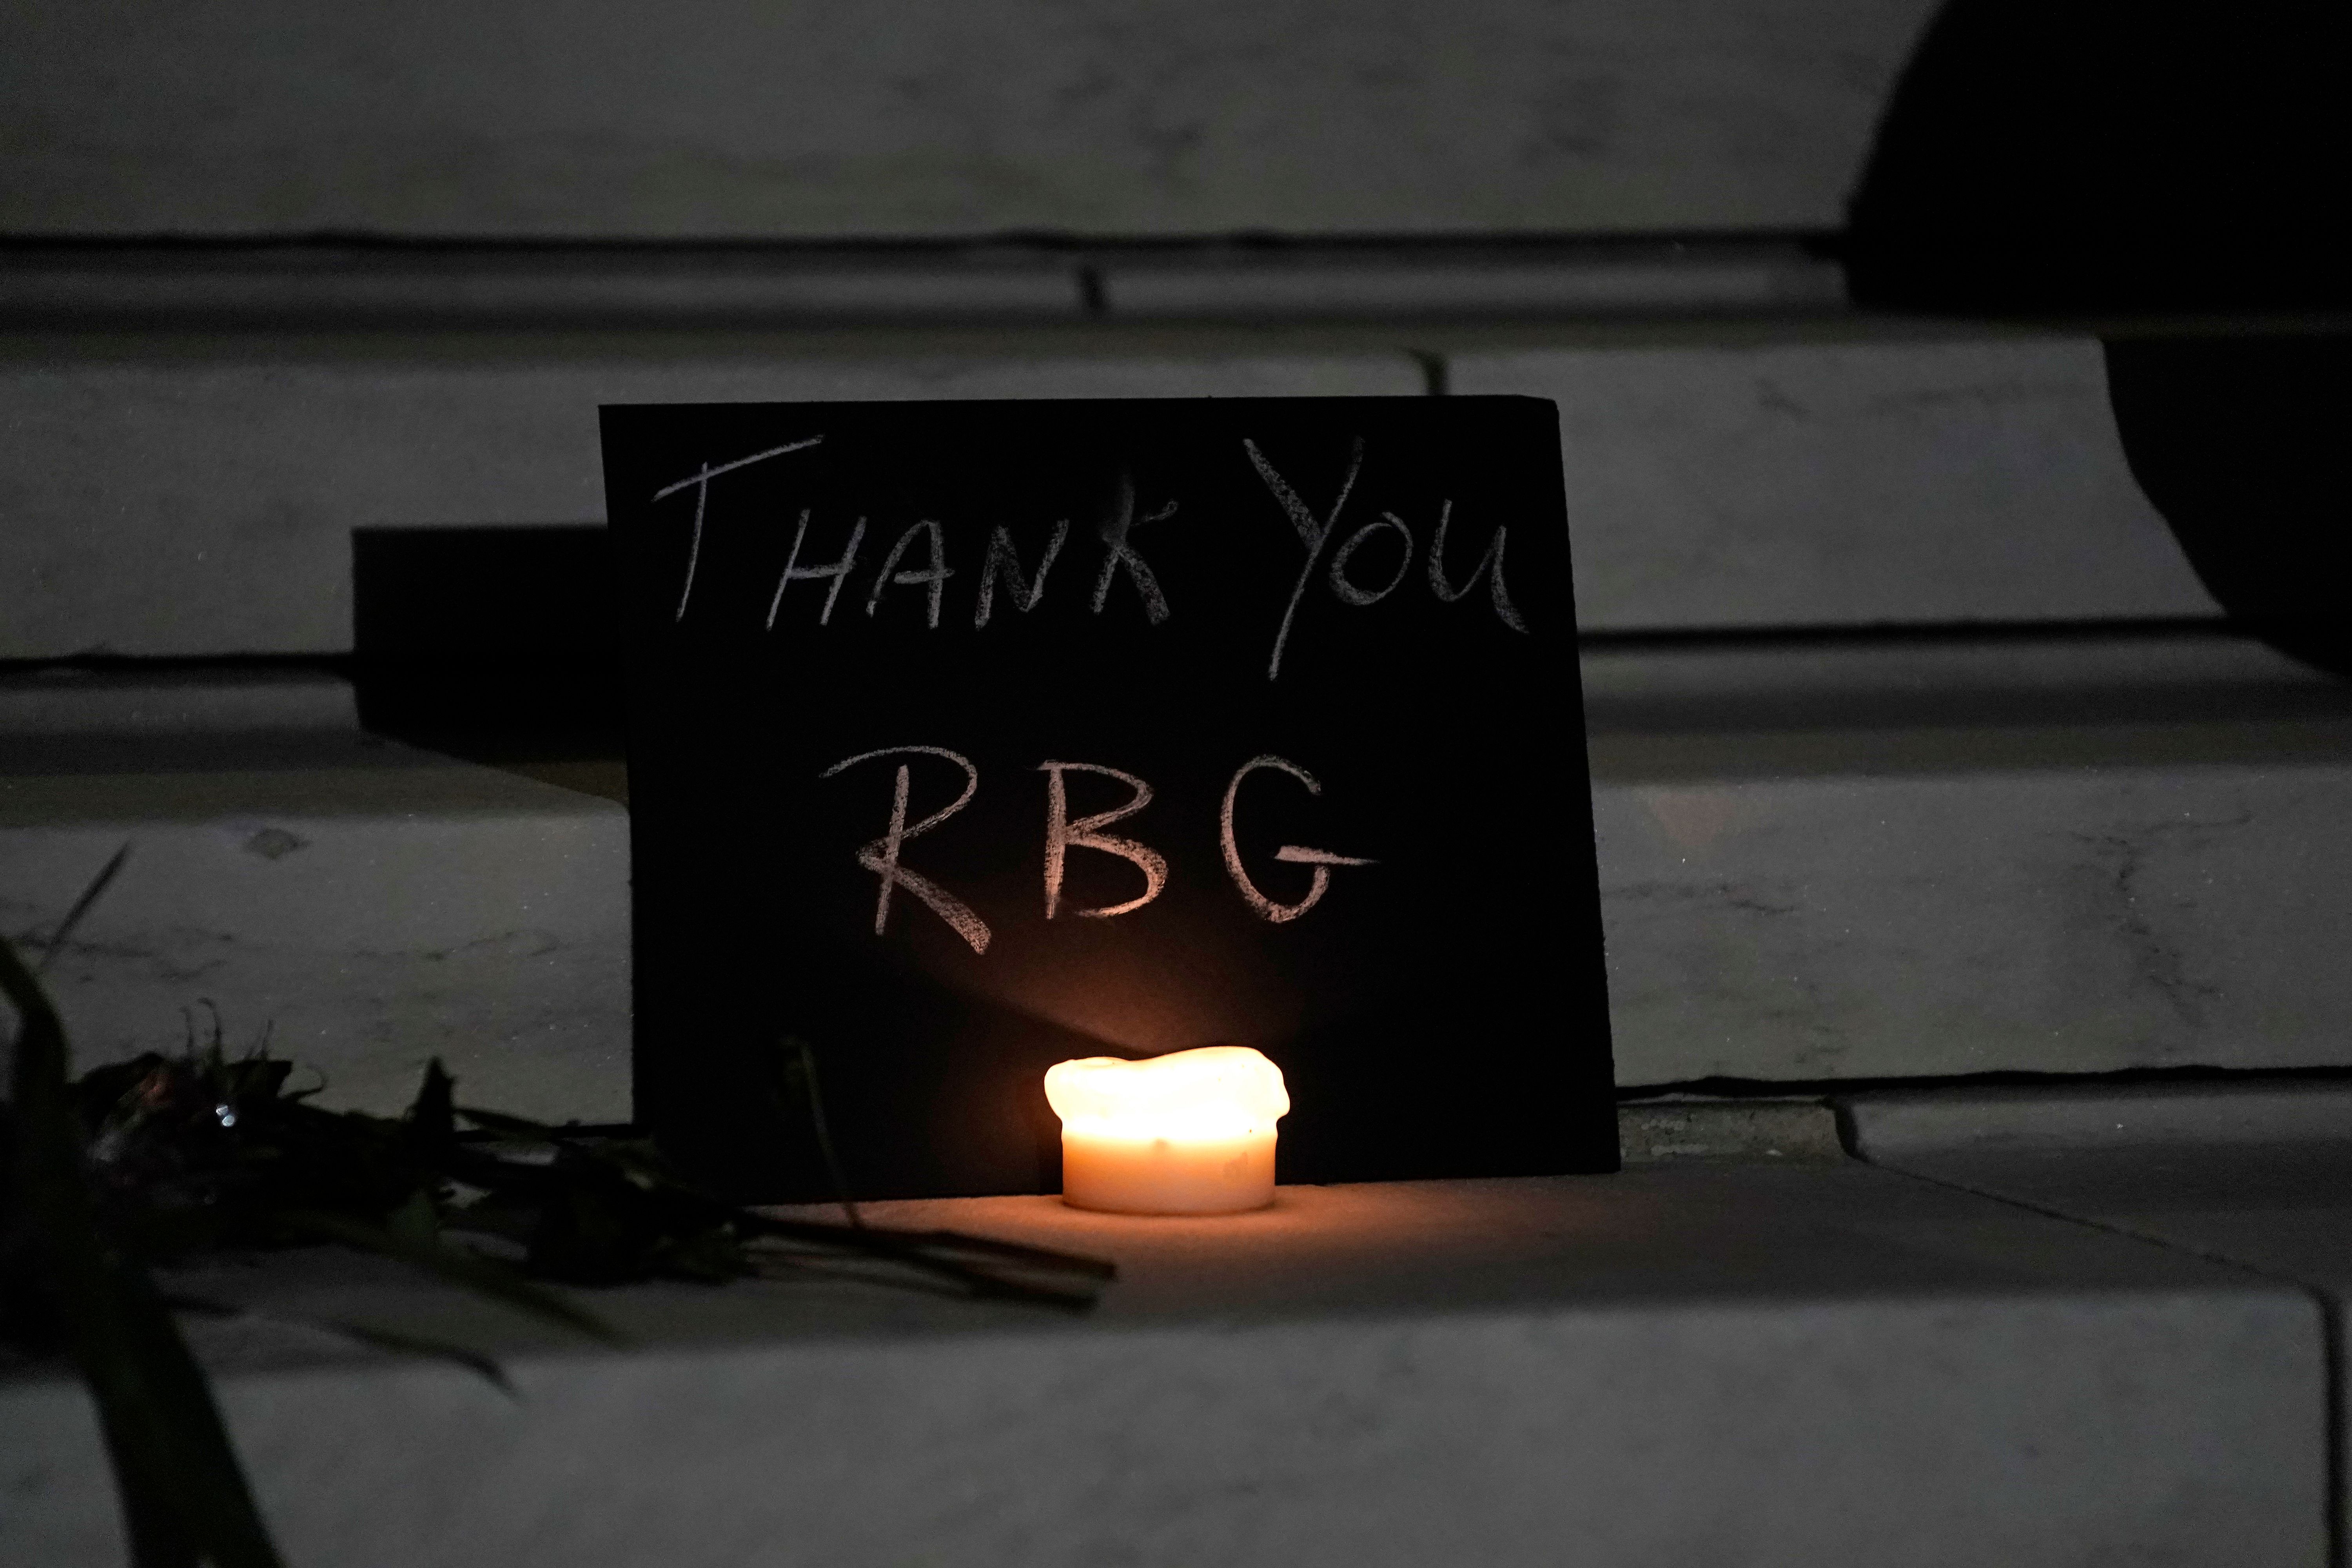 a "thank you rbg" sign